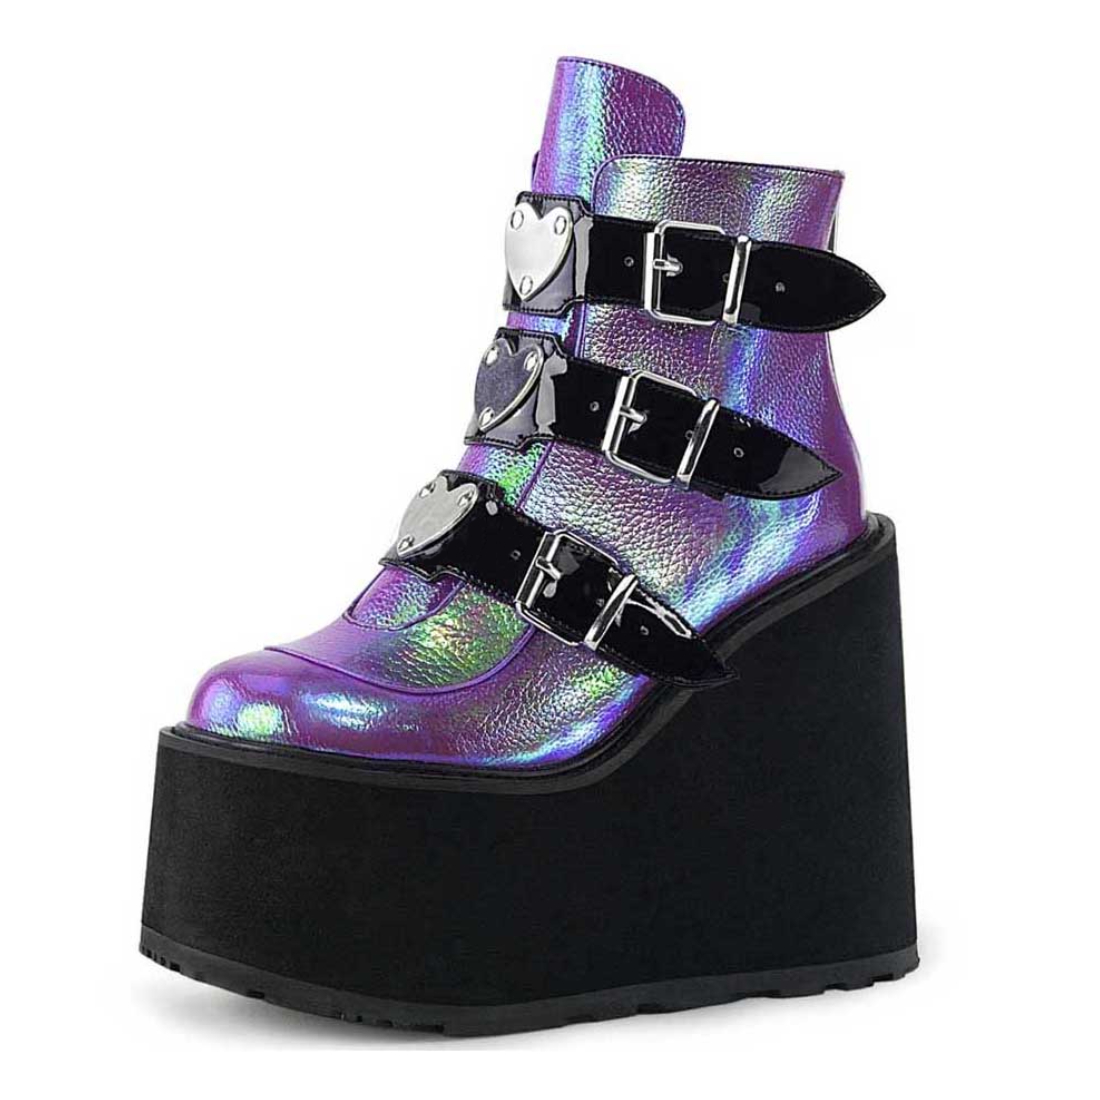 Kawaii Clothing Ankle Boots Platform Wedge Shoes Purple White Black Harajuku Punk Wh082